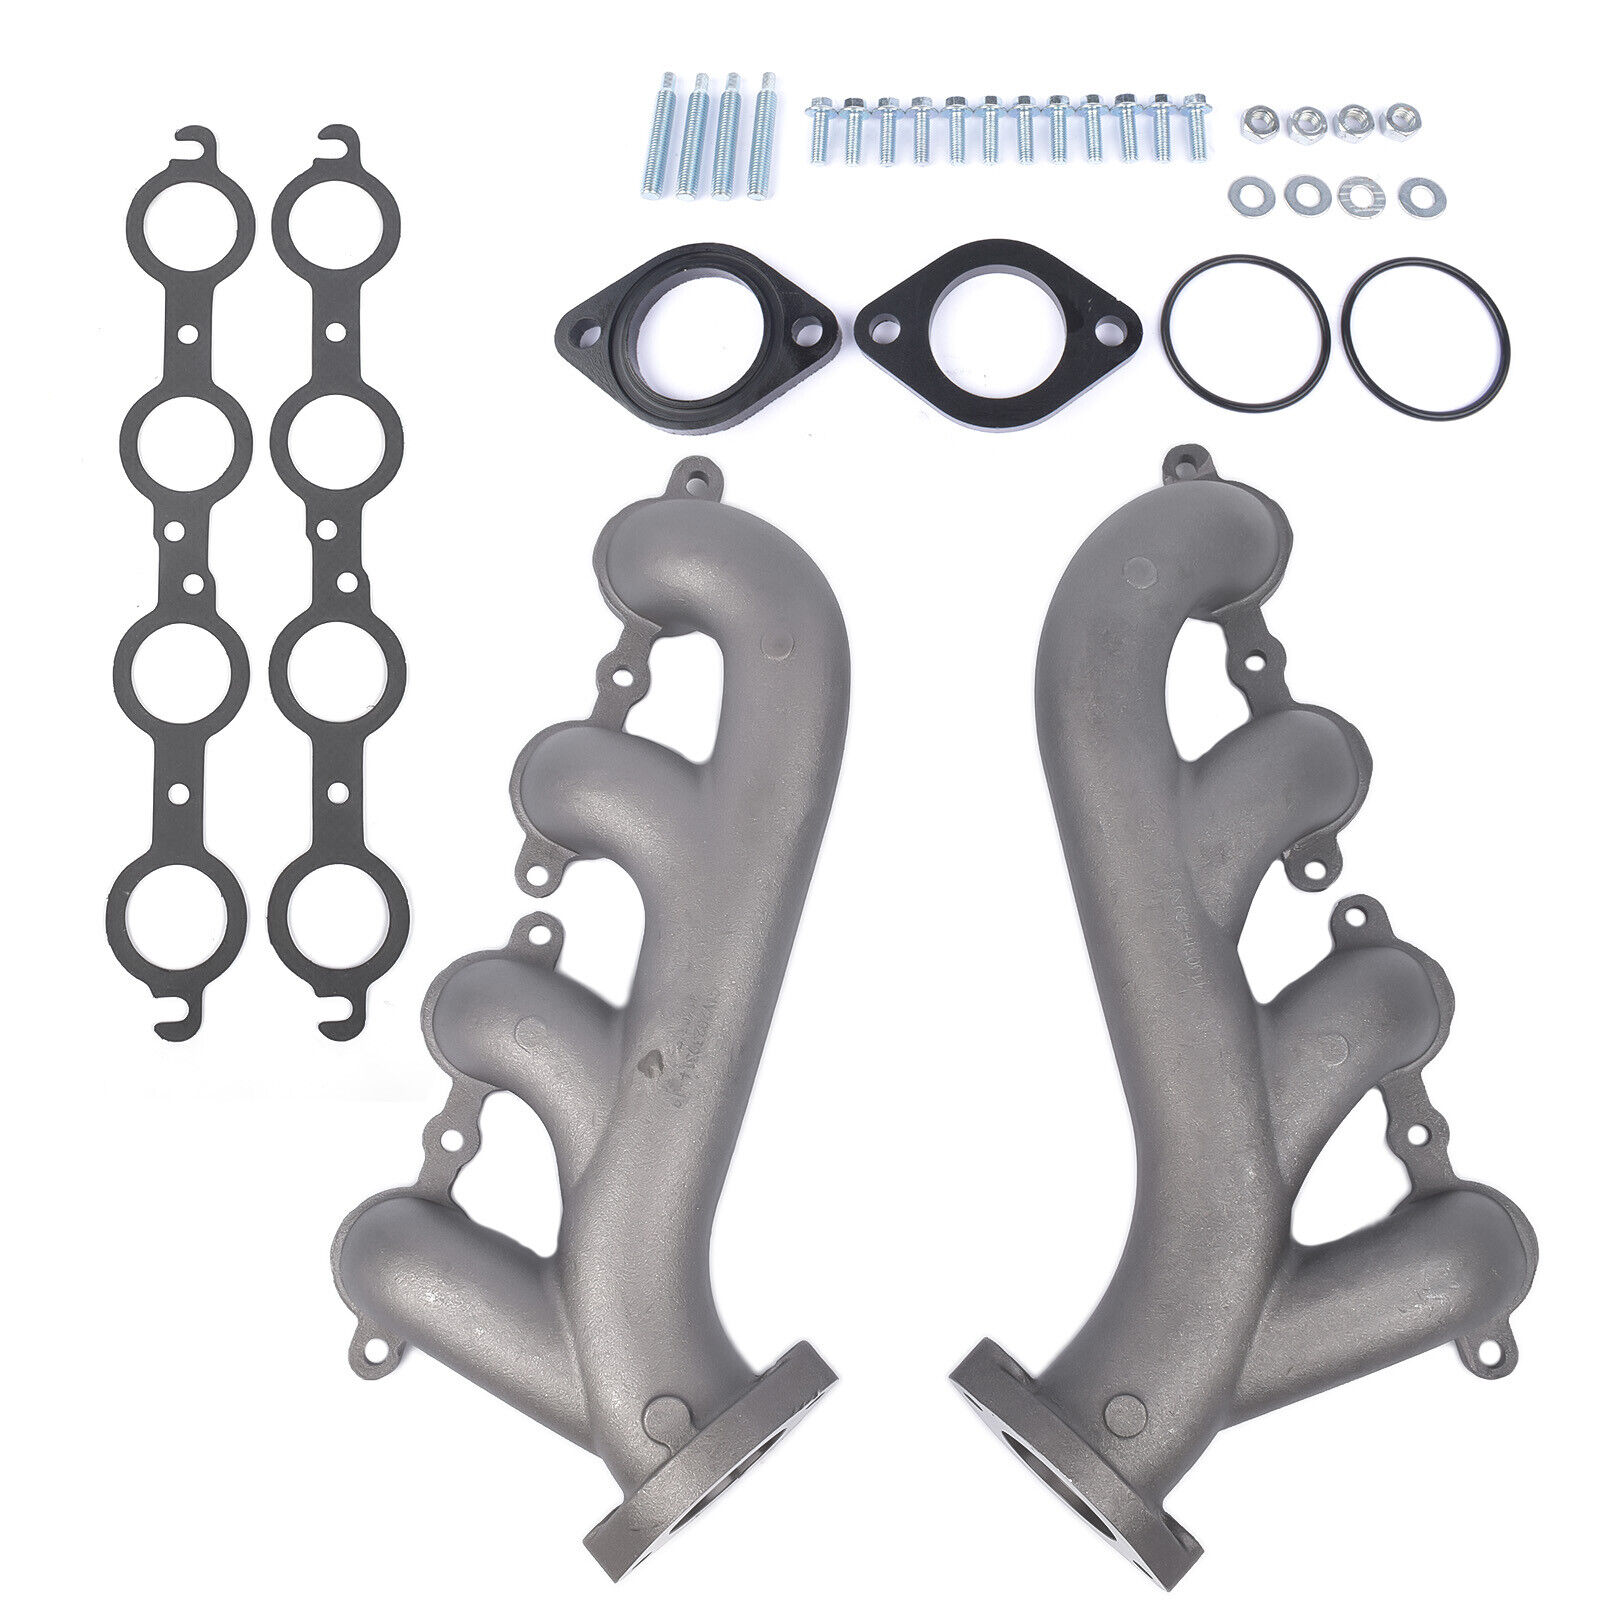 LS Swap Cast Iron Exhaust Manifold w/ Gasket Fits for Chevrolet 4.8L 5.3L 6.0L